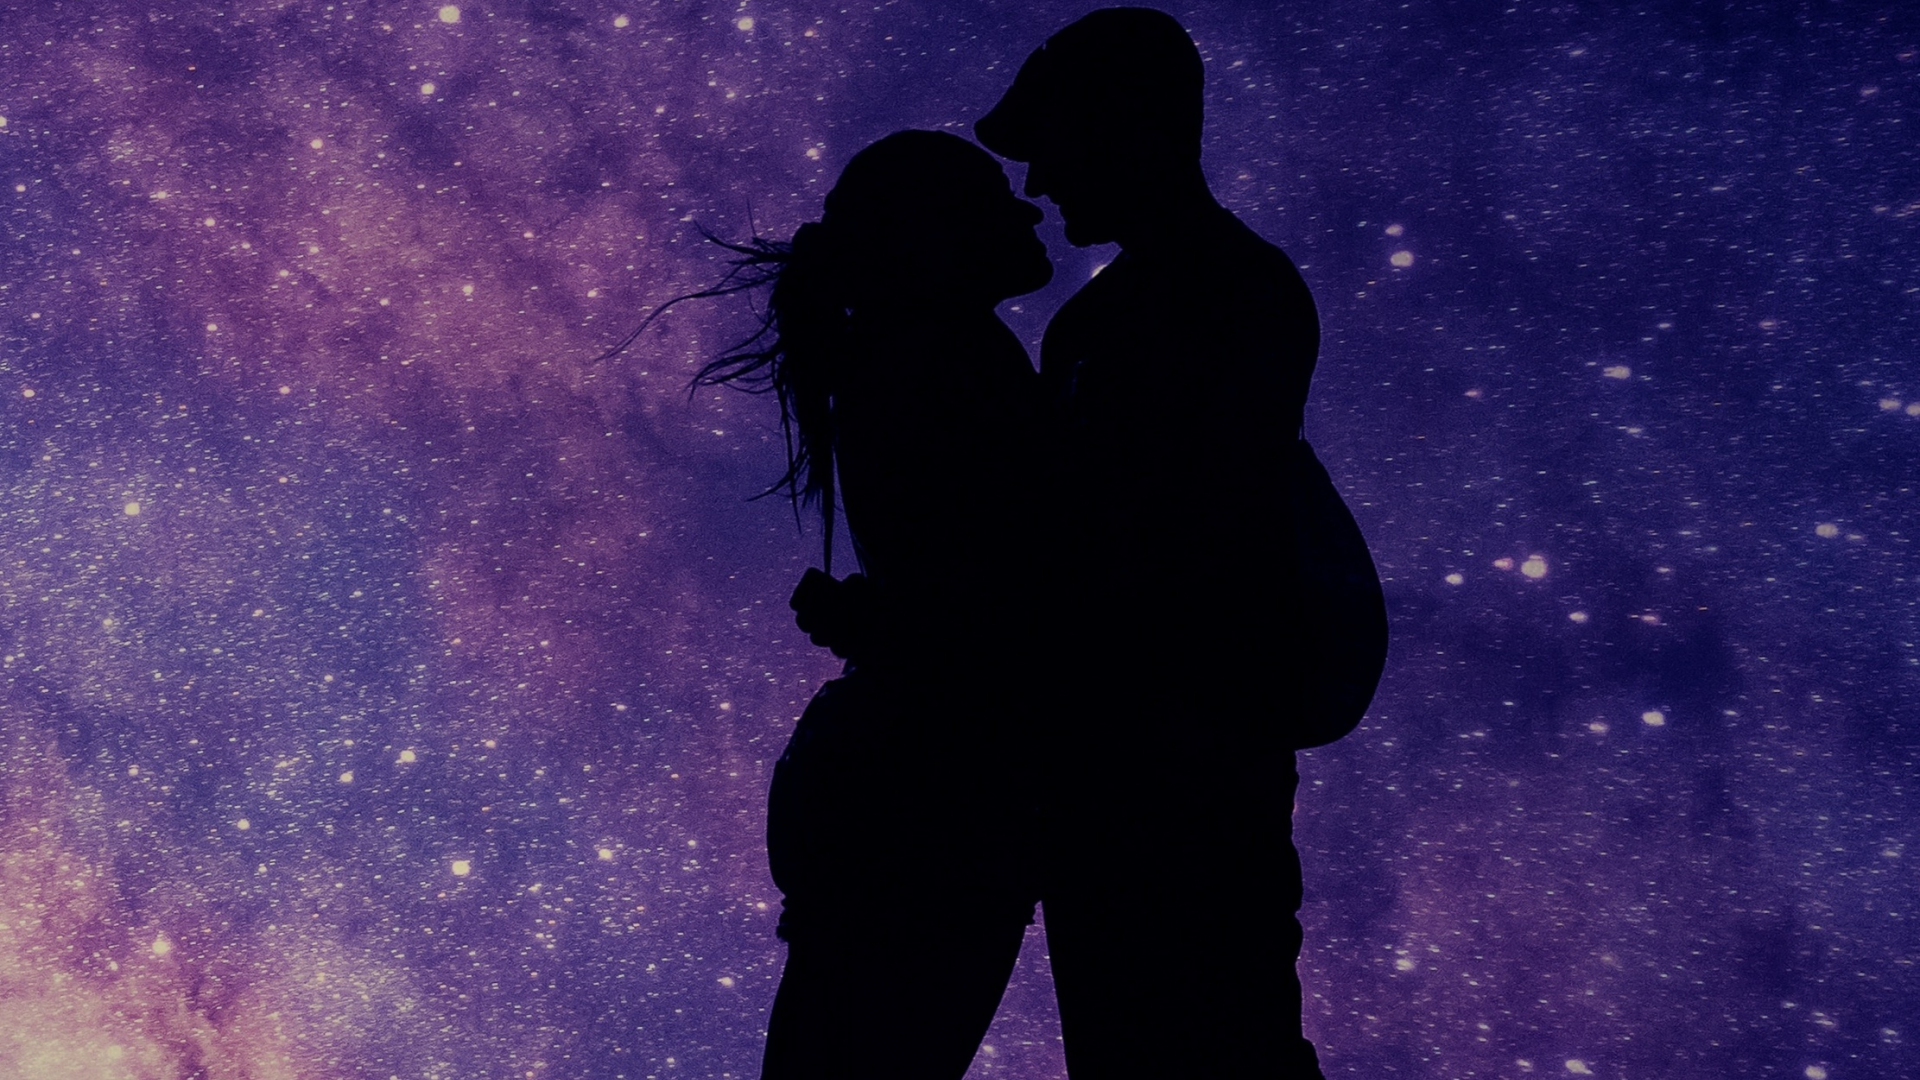 Download 1920x1080 Wallpaper Couple Romantic Night Love Silhouette Art Full Hd Hdtv Fhd 1080p 1920x1080 Hd Image Background 19046